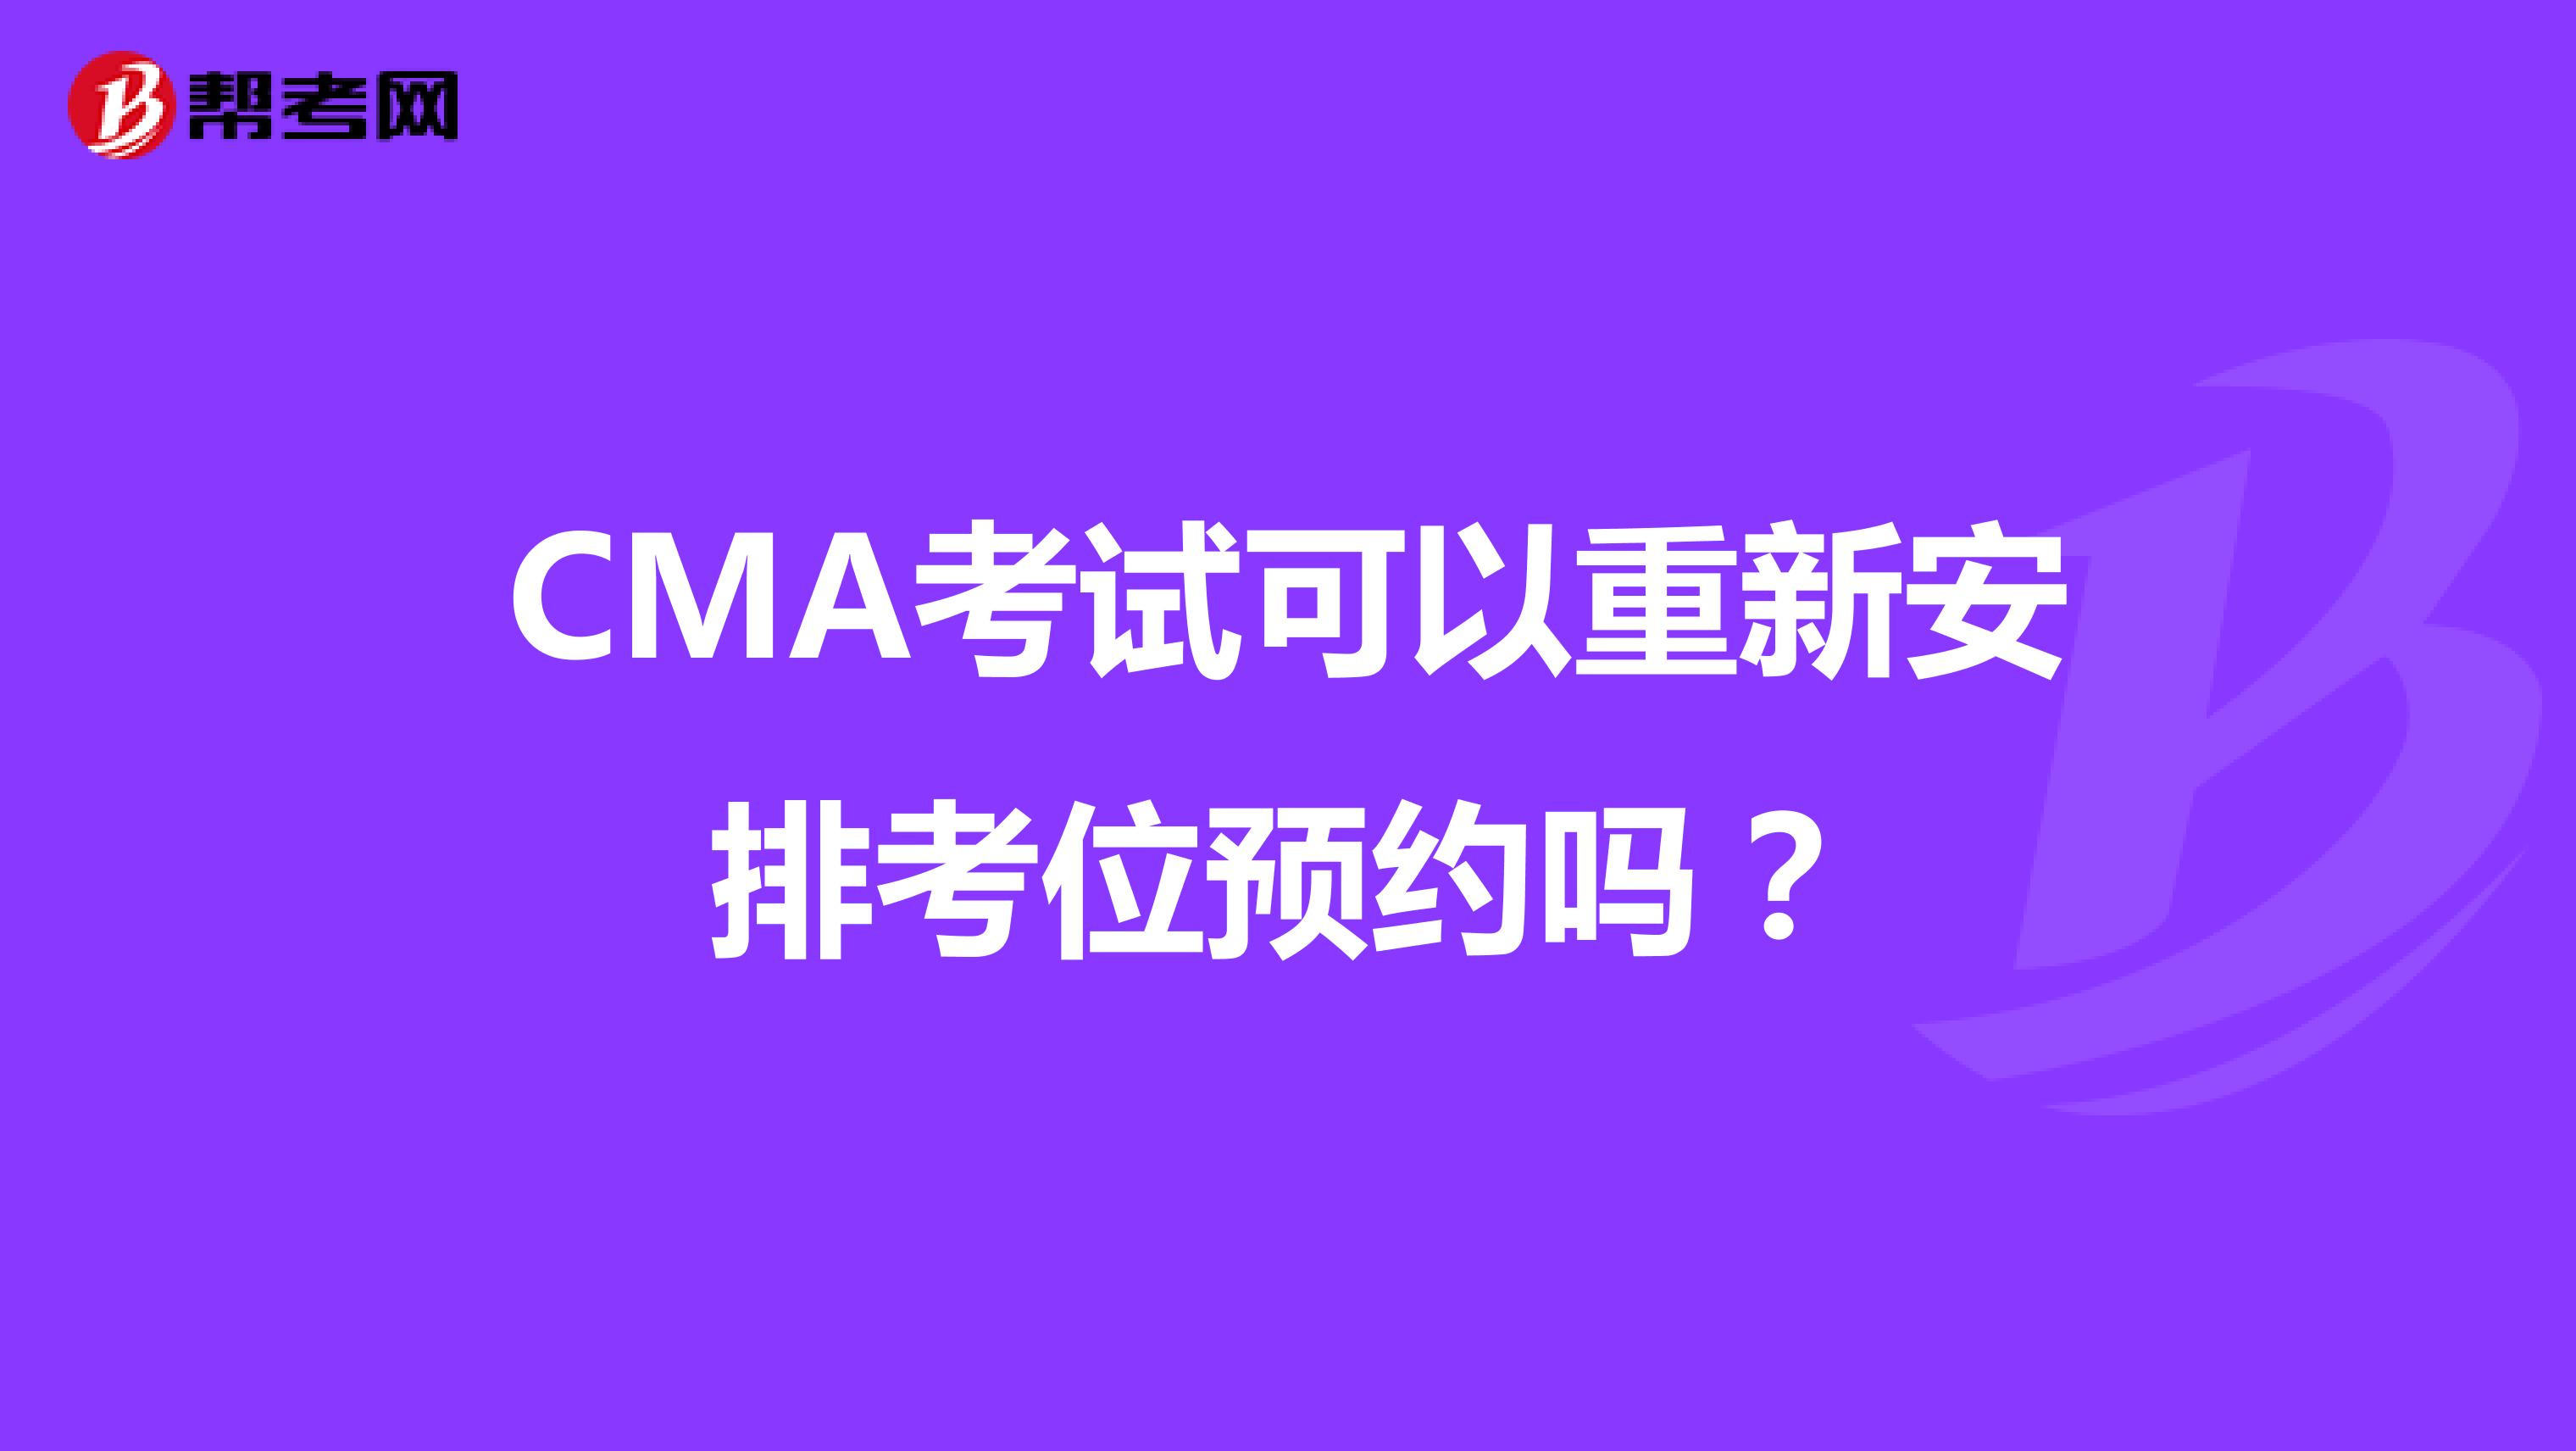 CMA考试可以重新安排考位预约吗？